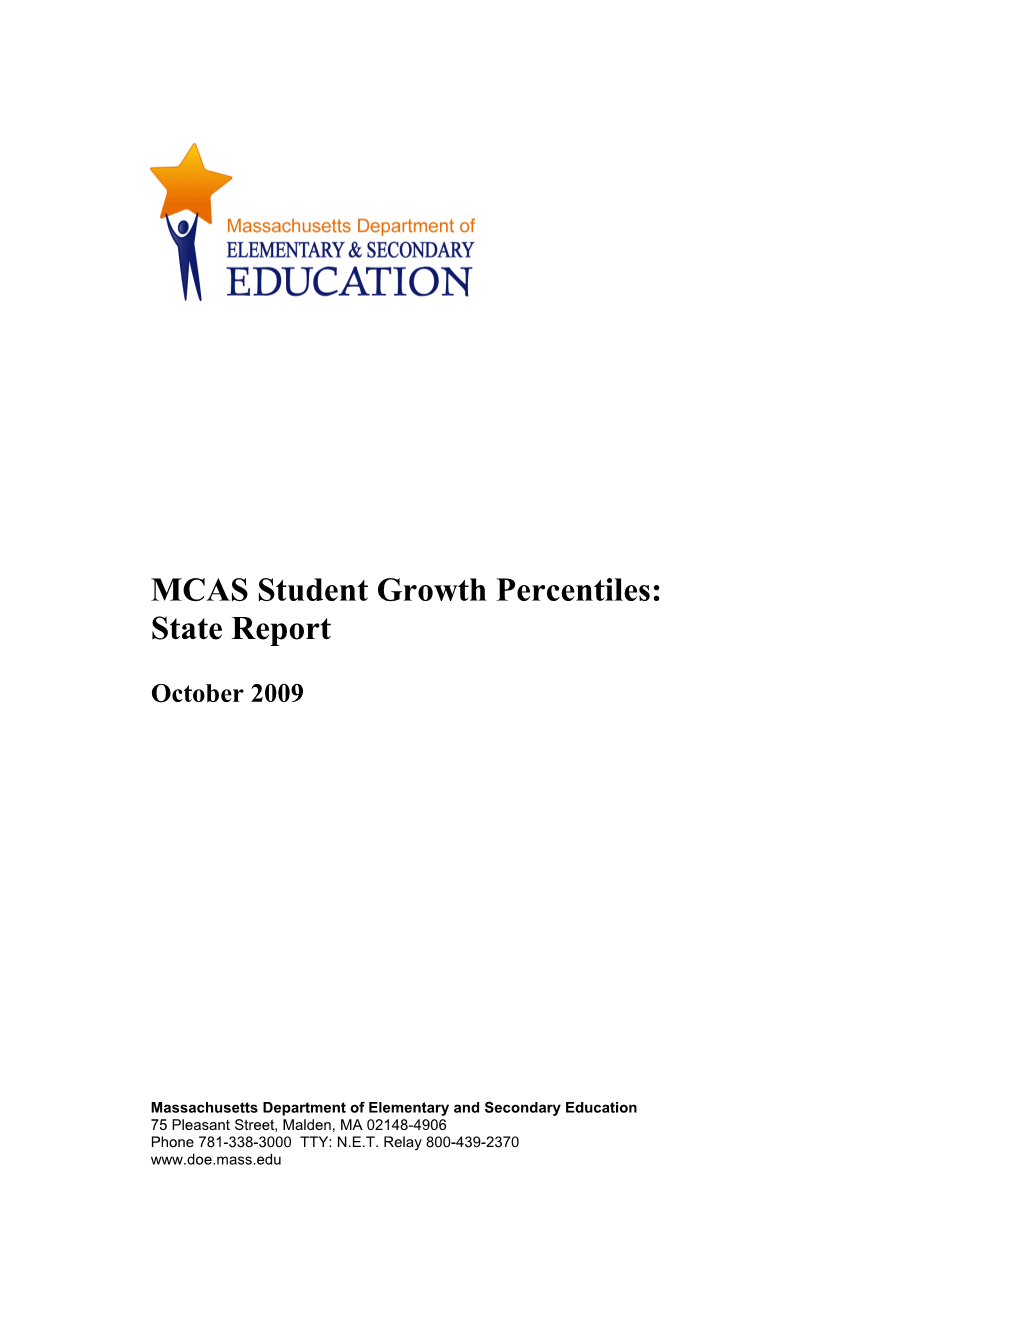 Massachusetts Student Growth Percentiles: State Report